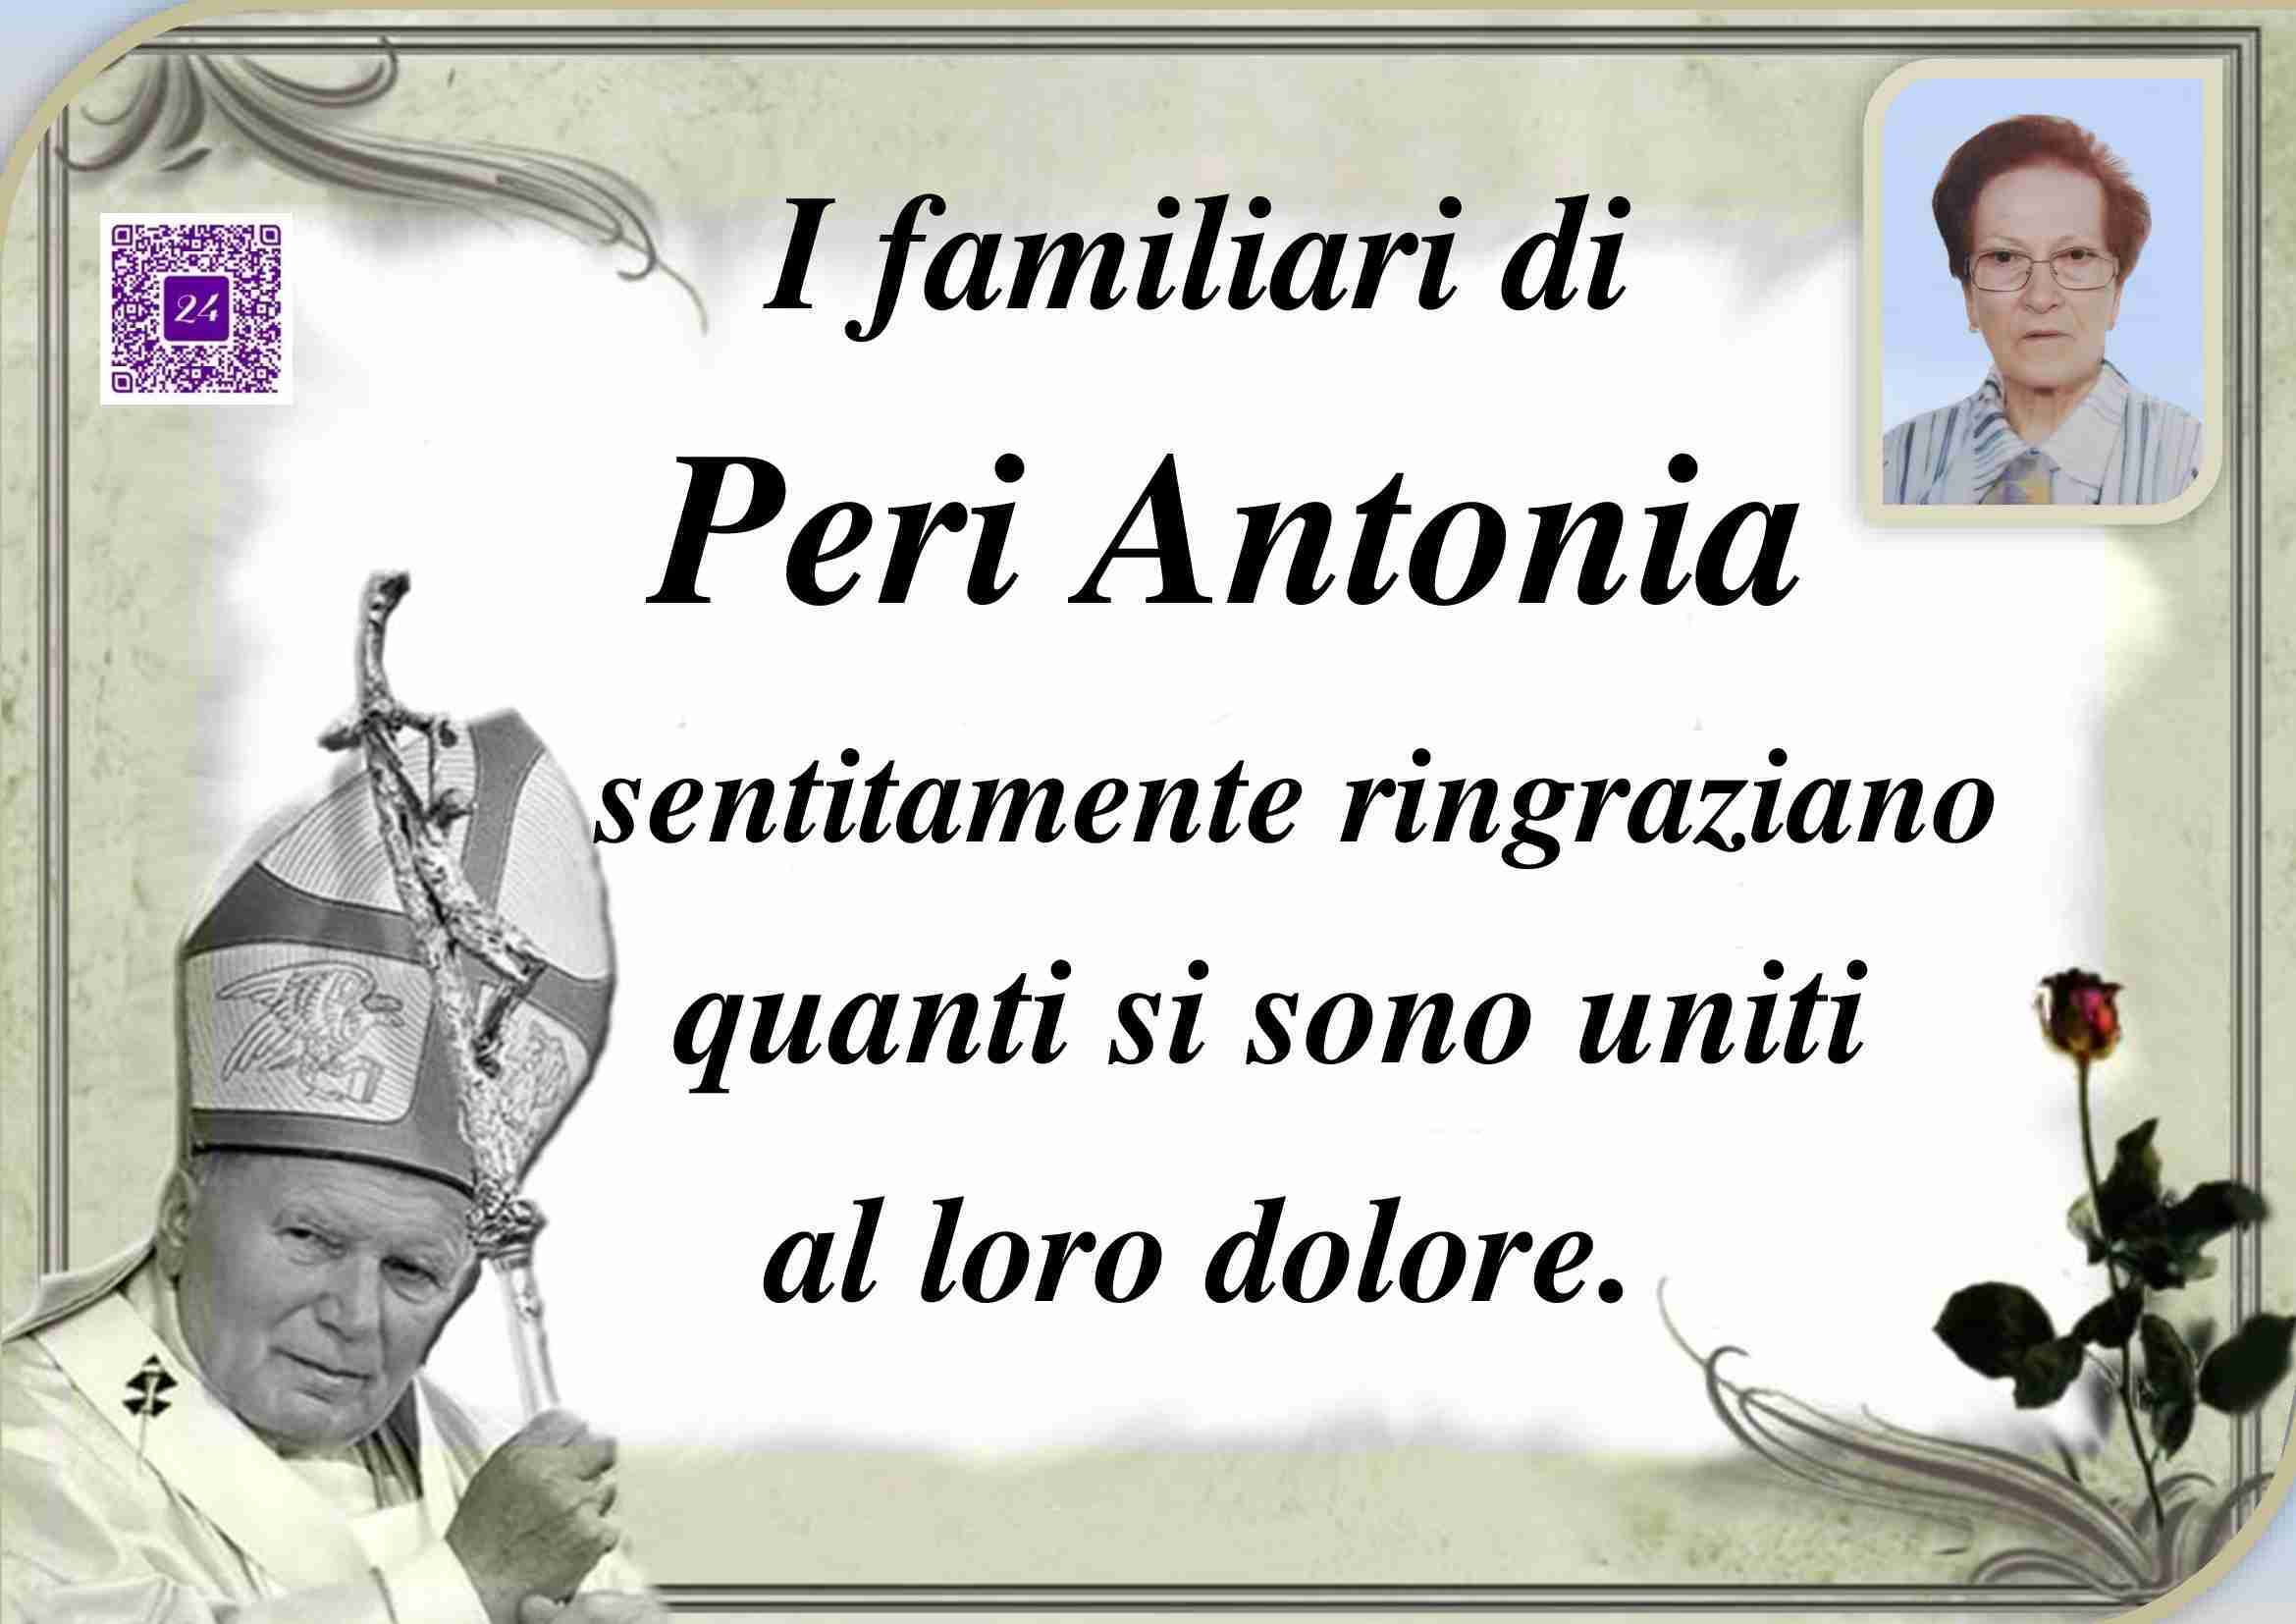 Antonia Peri